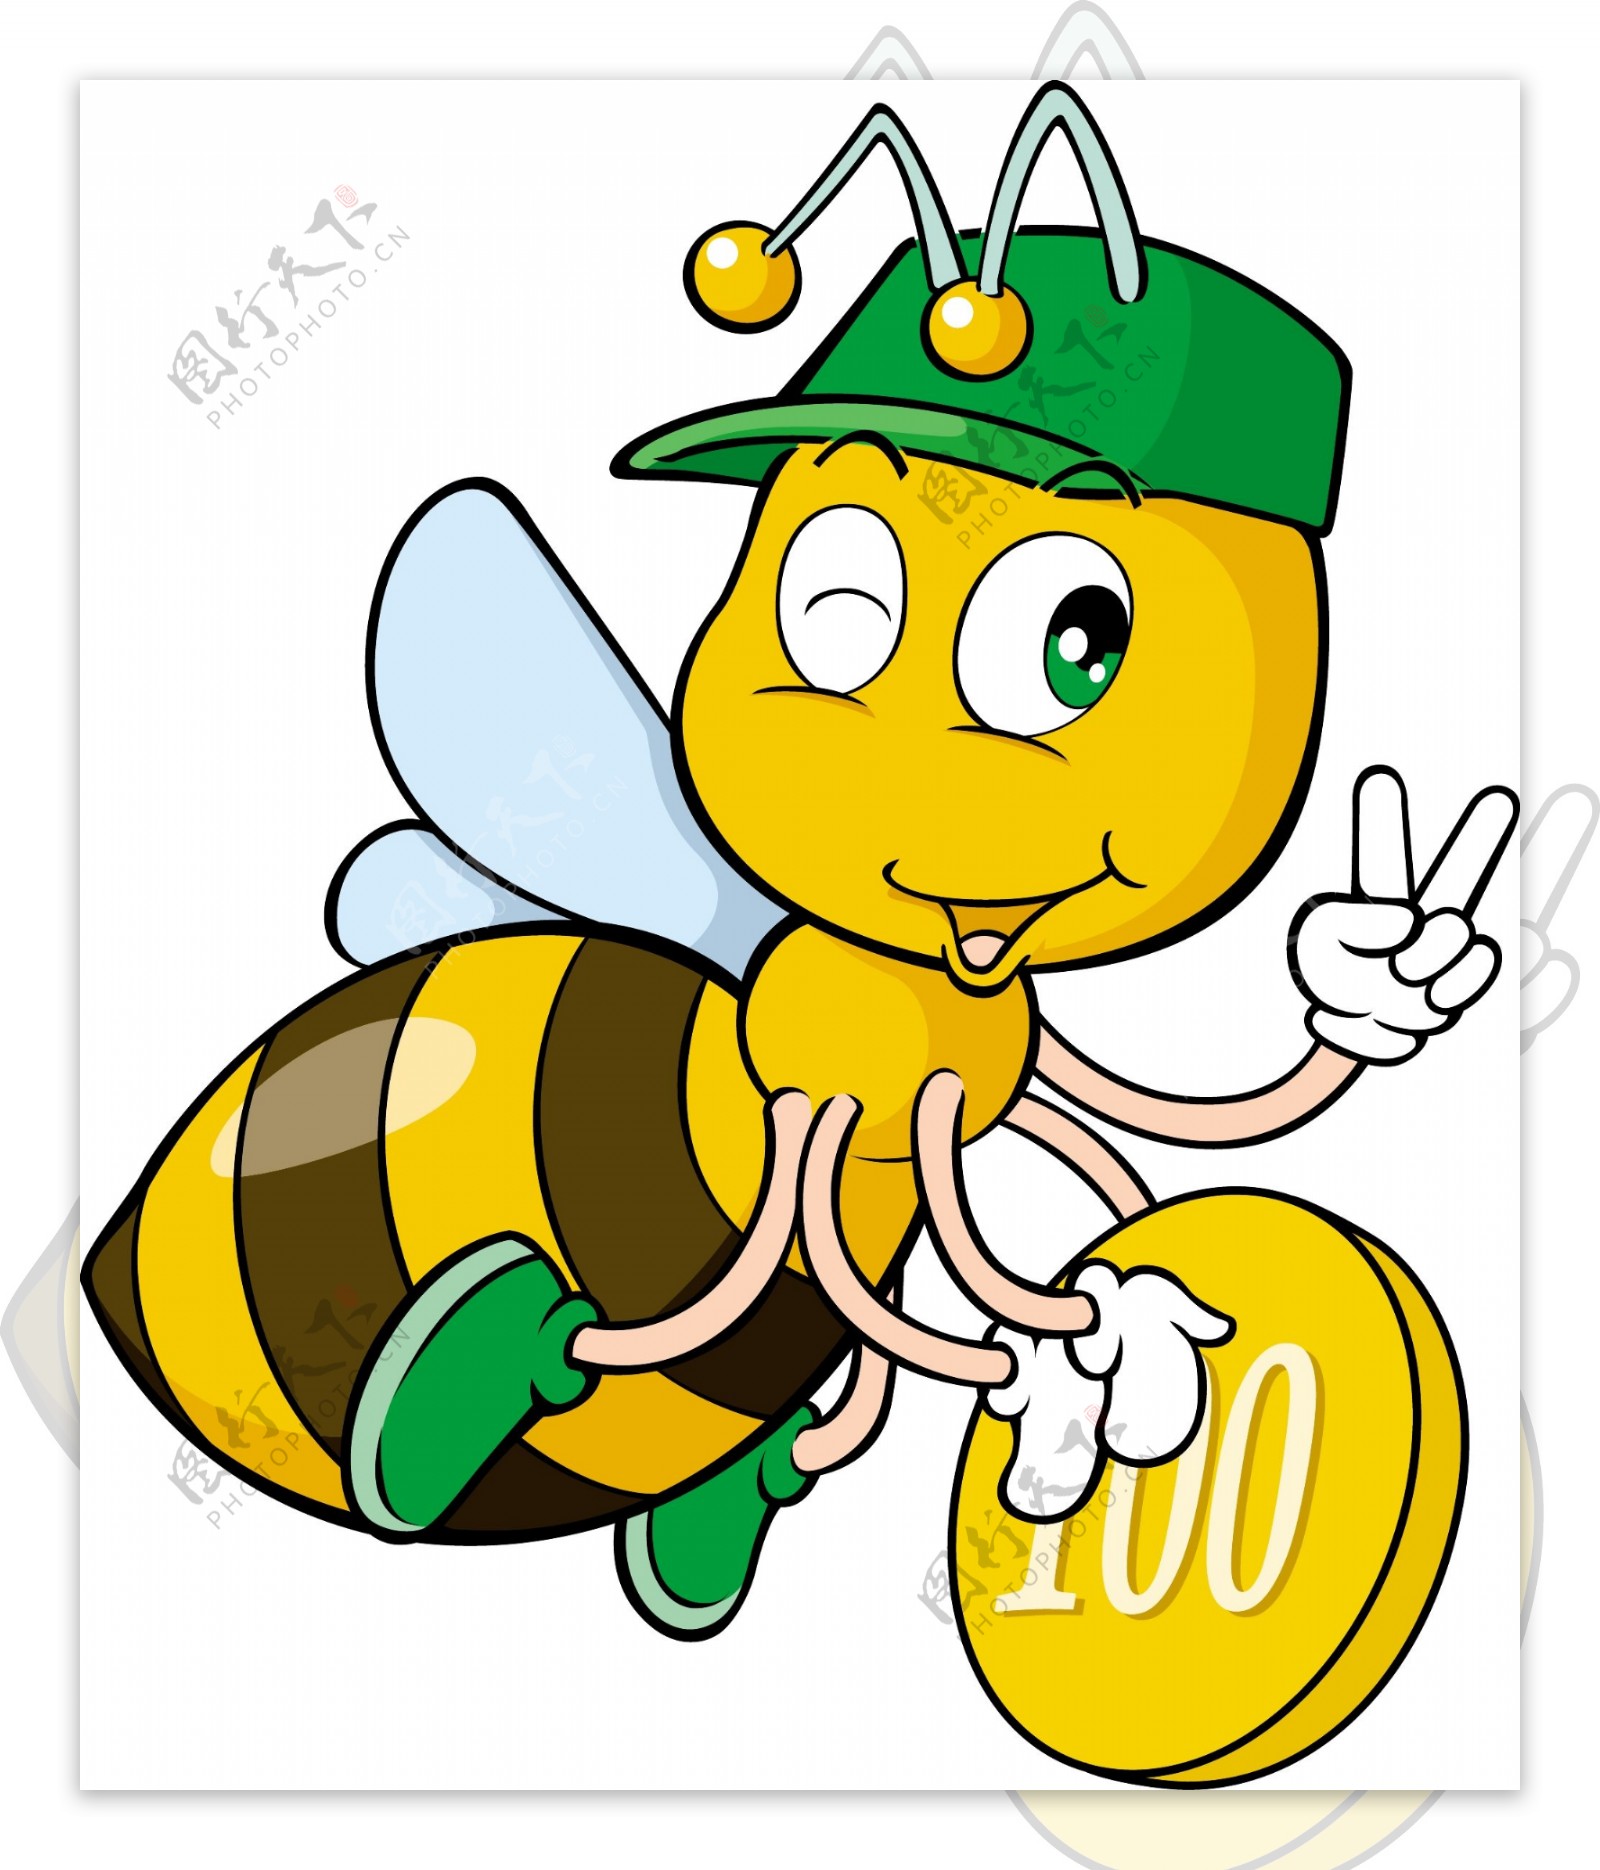 蜜蜂19